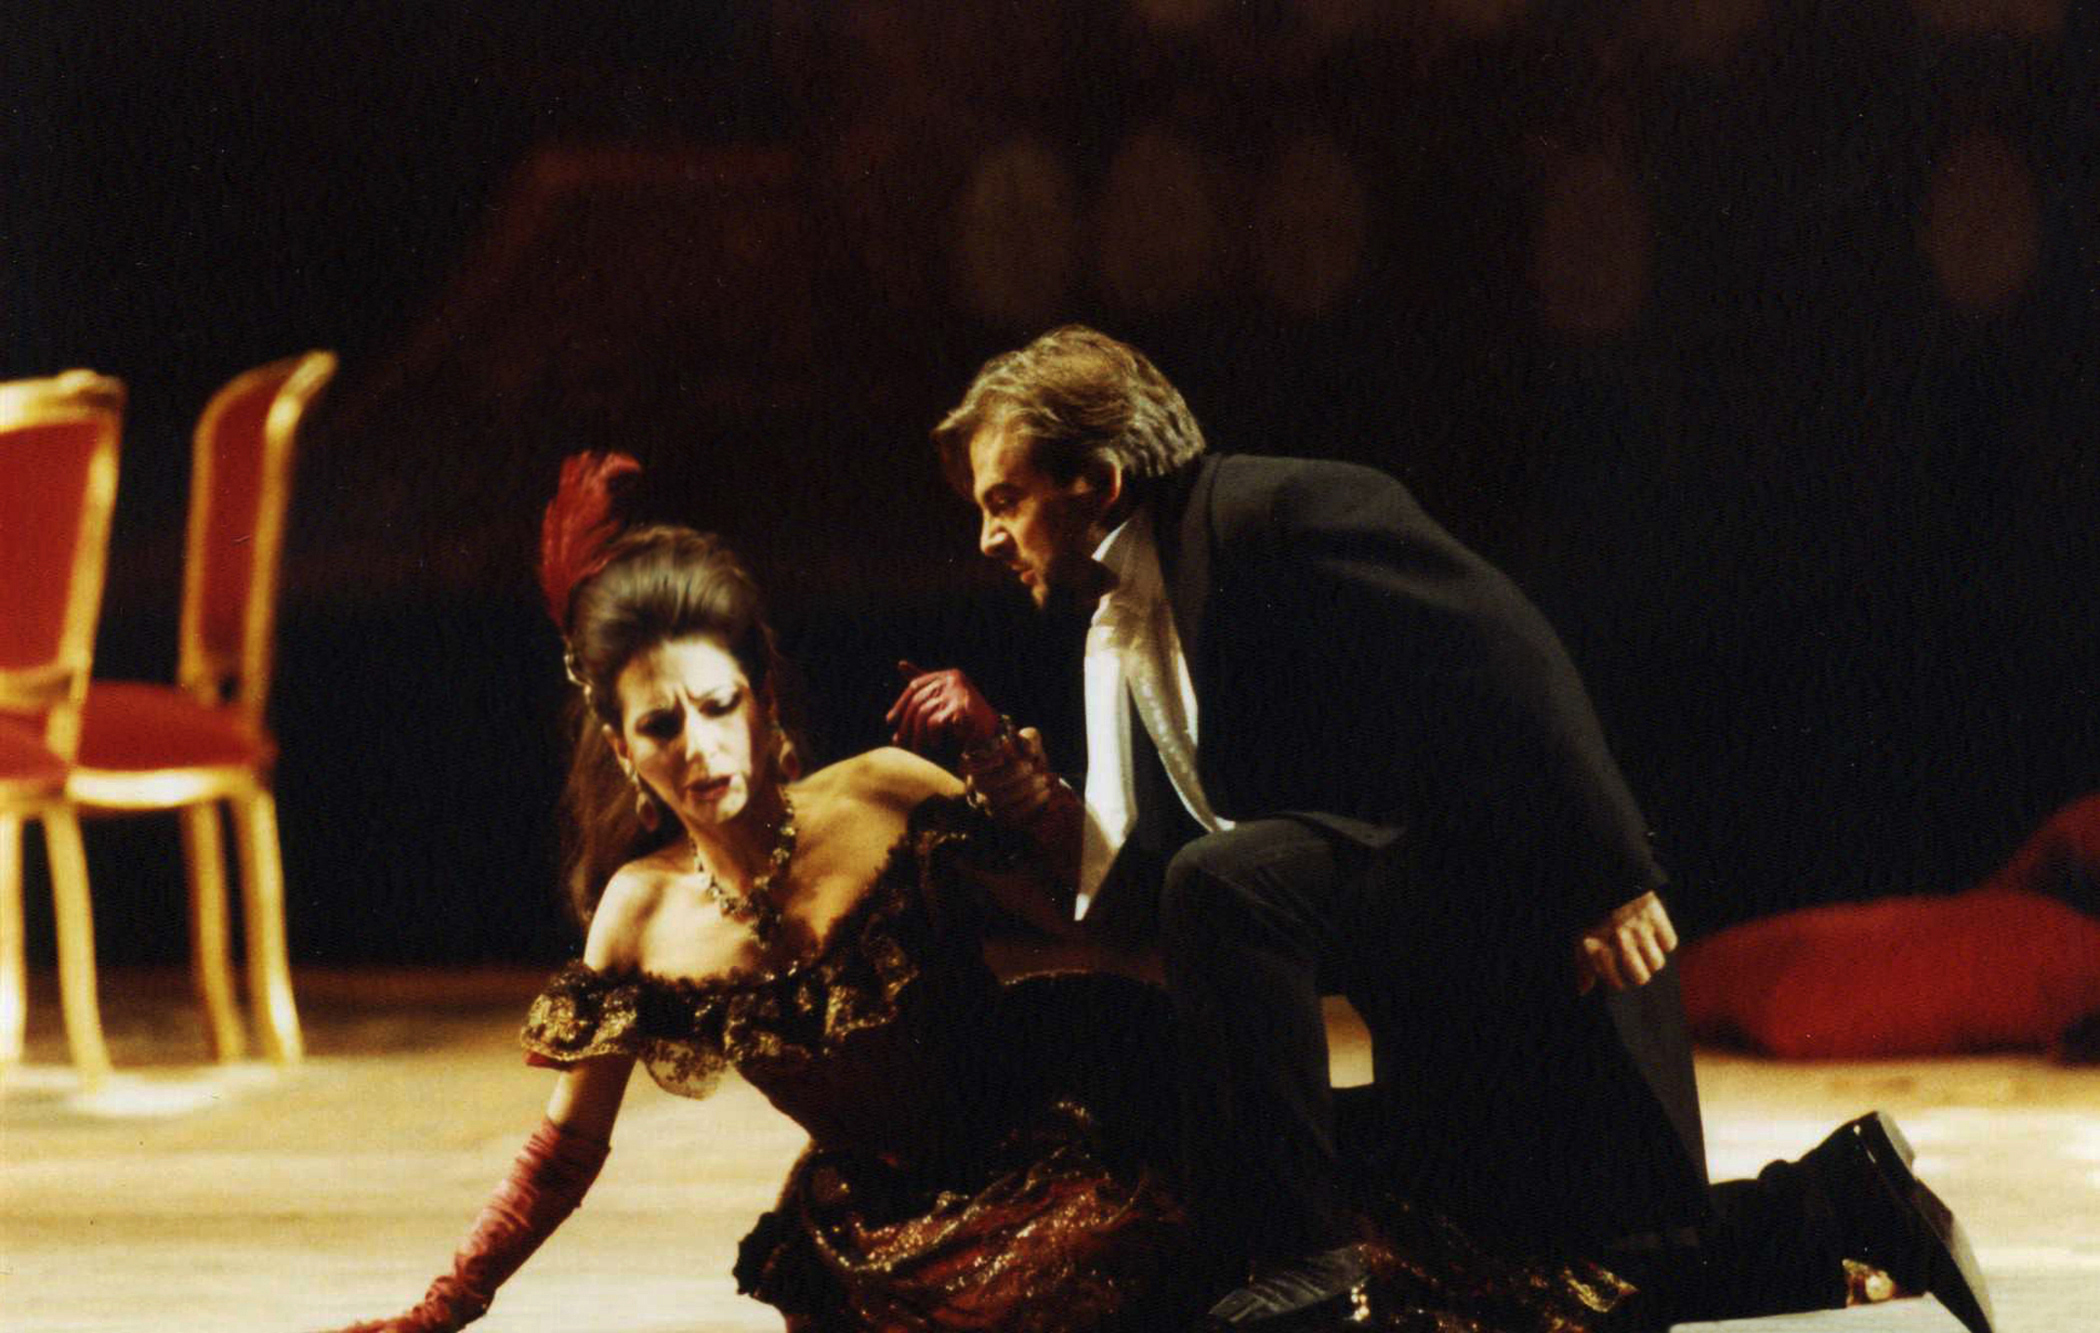 Lucia Aliberti with the French tenor Jean-Luc Viala⚘Rome Opera House"⚘Rome⚘Opera⚘"La Traviata”⚘On Stage⚘Photo taken from the TV News⚘TV Portrait⚘:http://www.luciaaliberti.it #luciaaliberti #jeanlucviala #romeoperahouse #rome #latraviata #opera #onstage #henningbrockhaus #tvnews #tvportrait